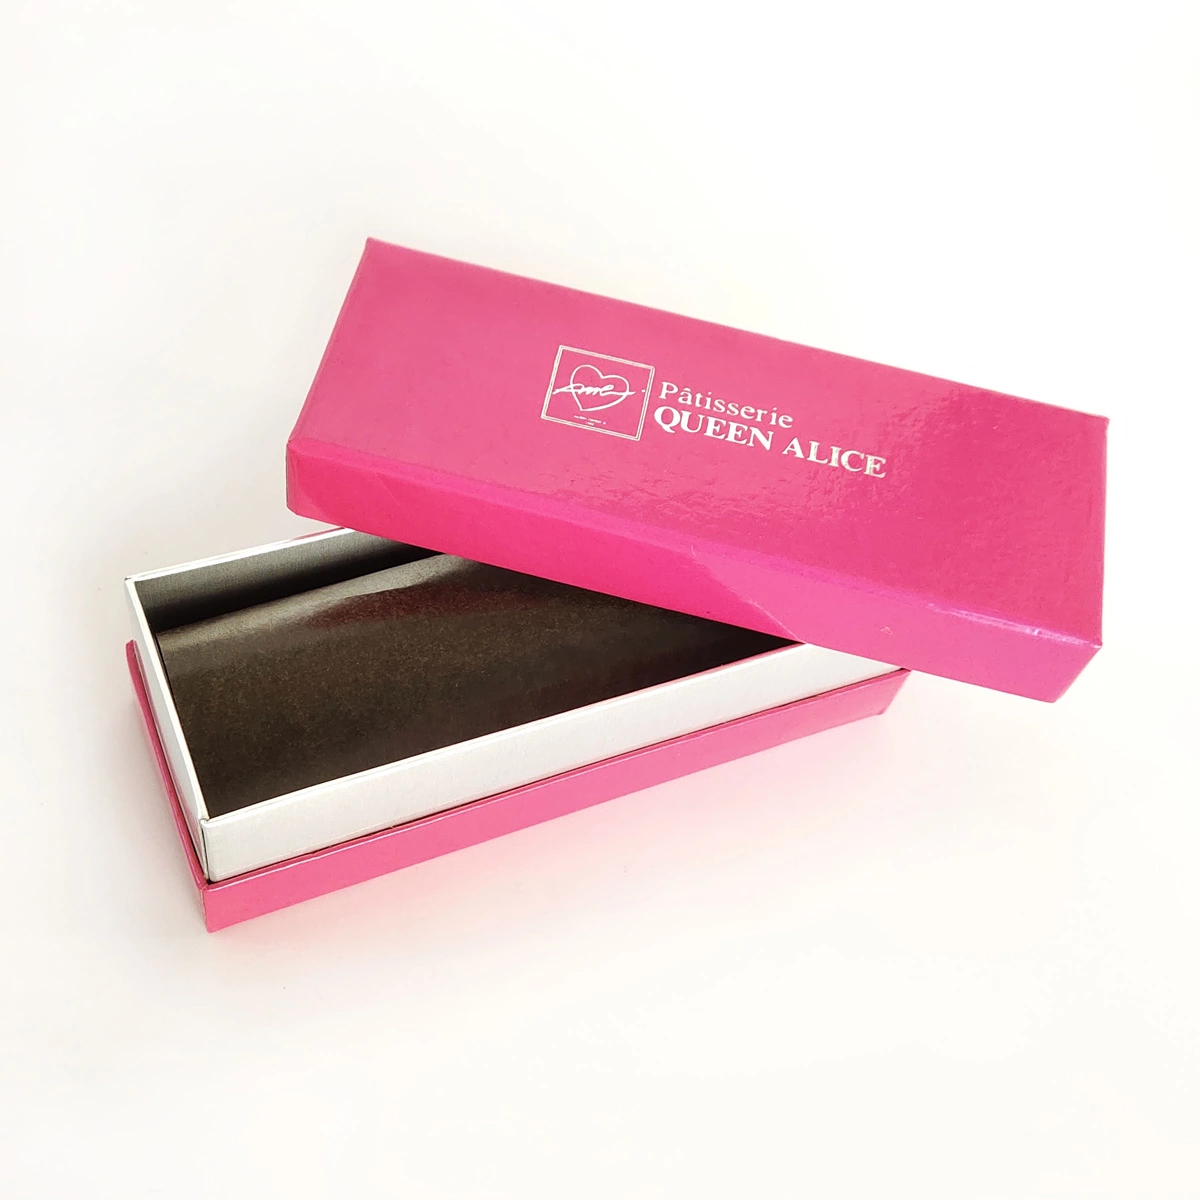 Gift Box Pink